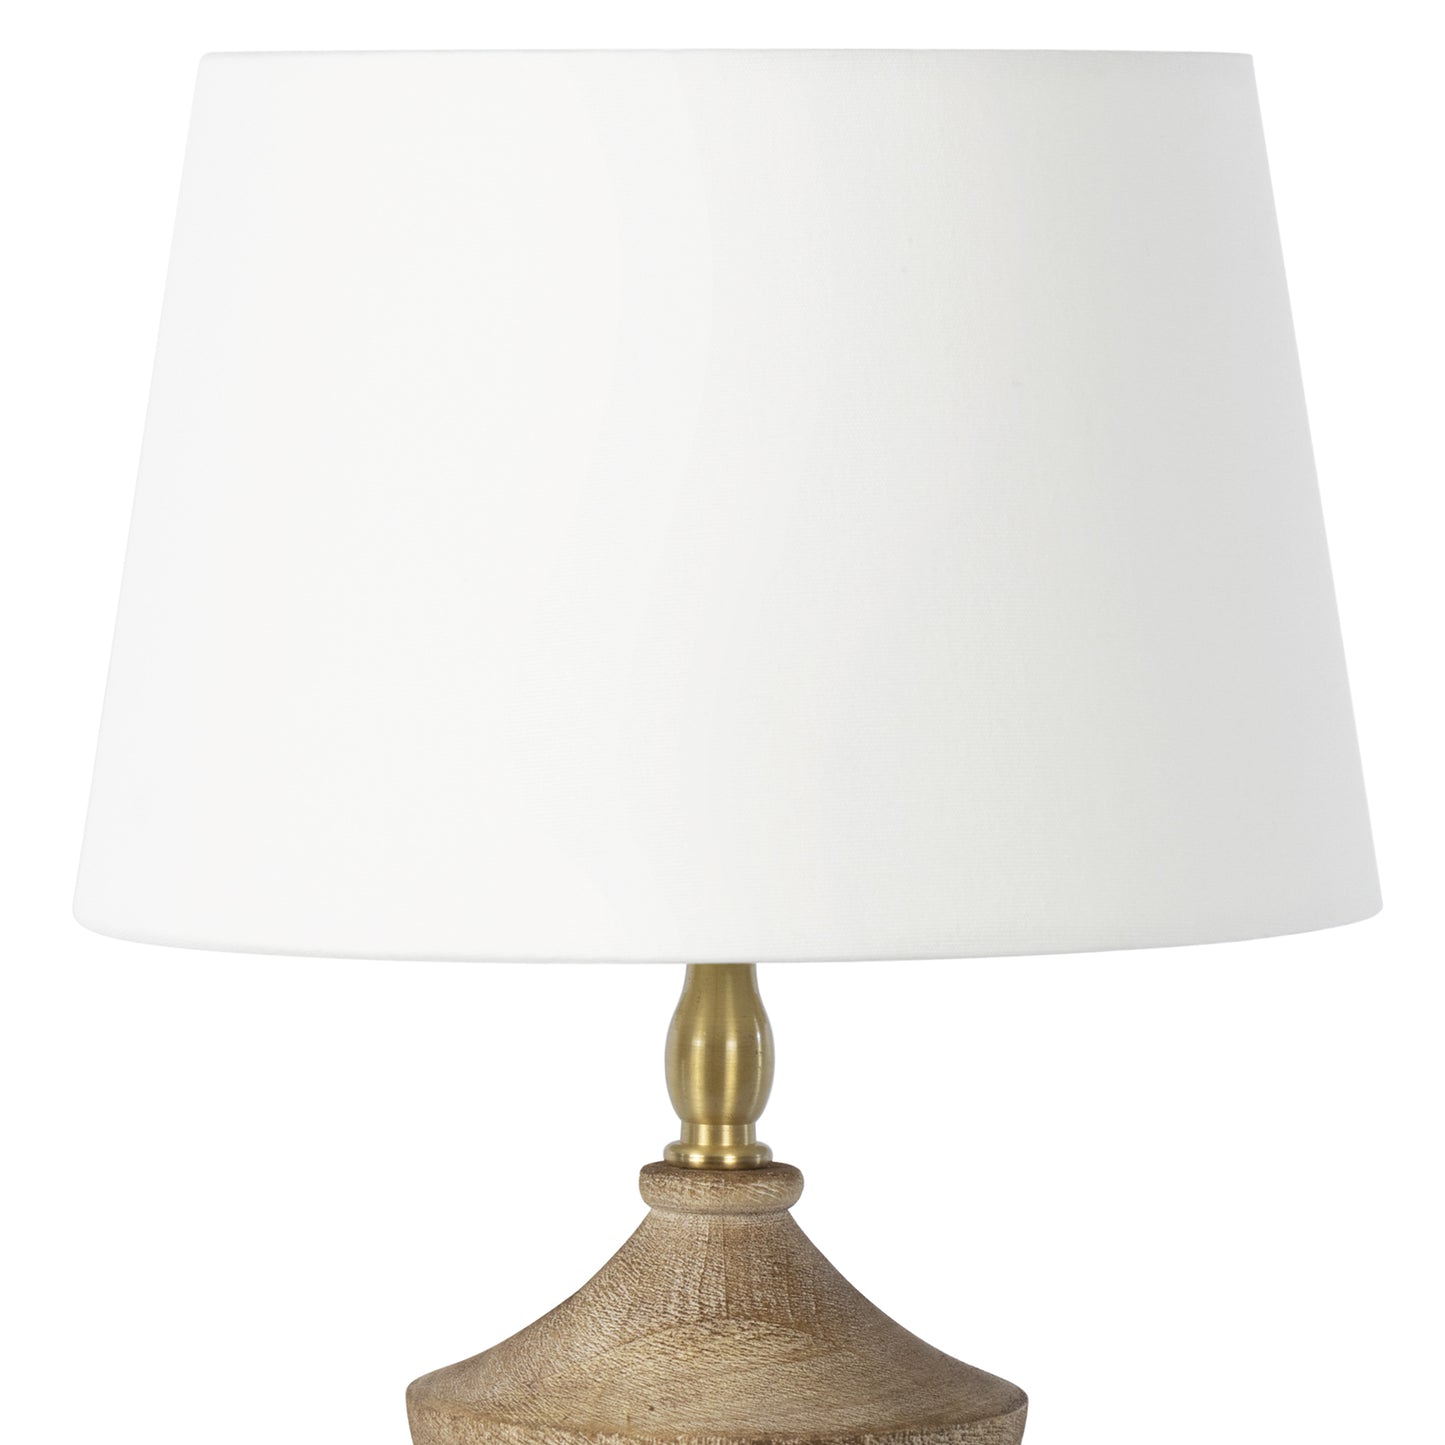 Beatrix Wood Mini Lamp by Southern Living